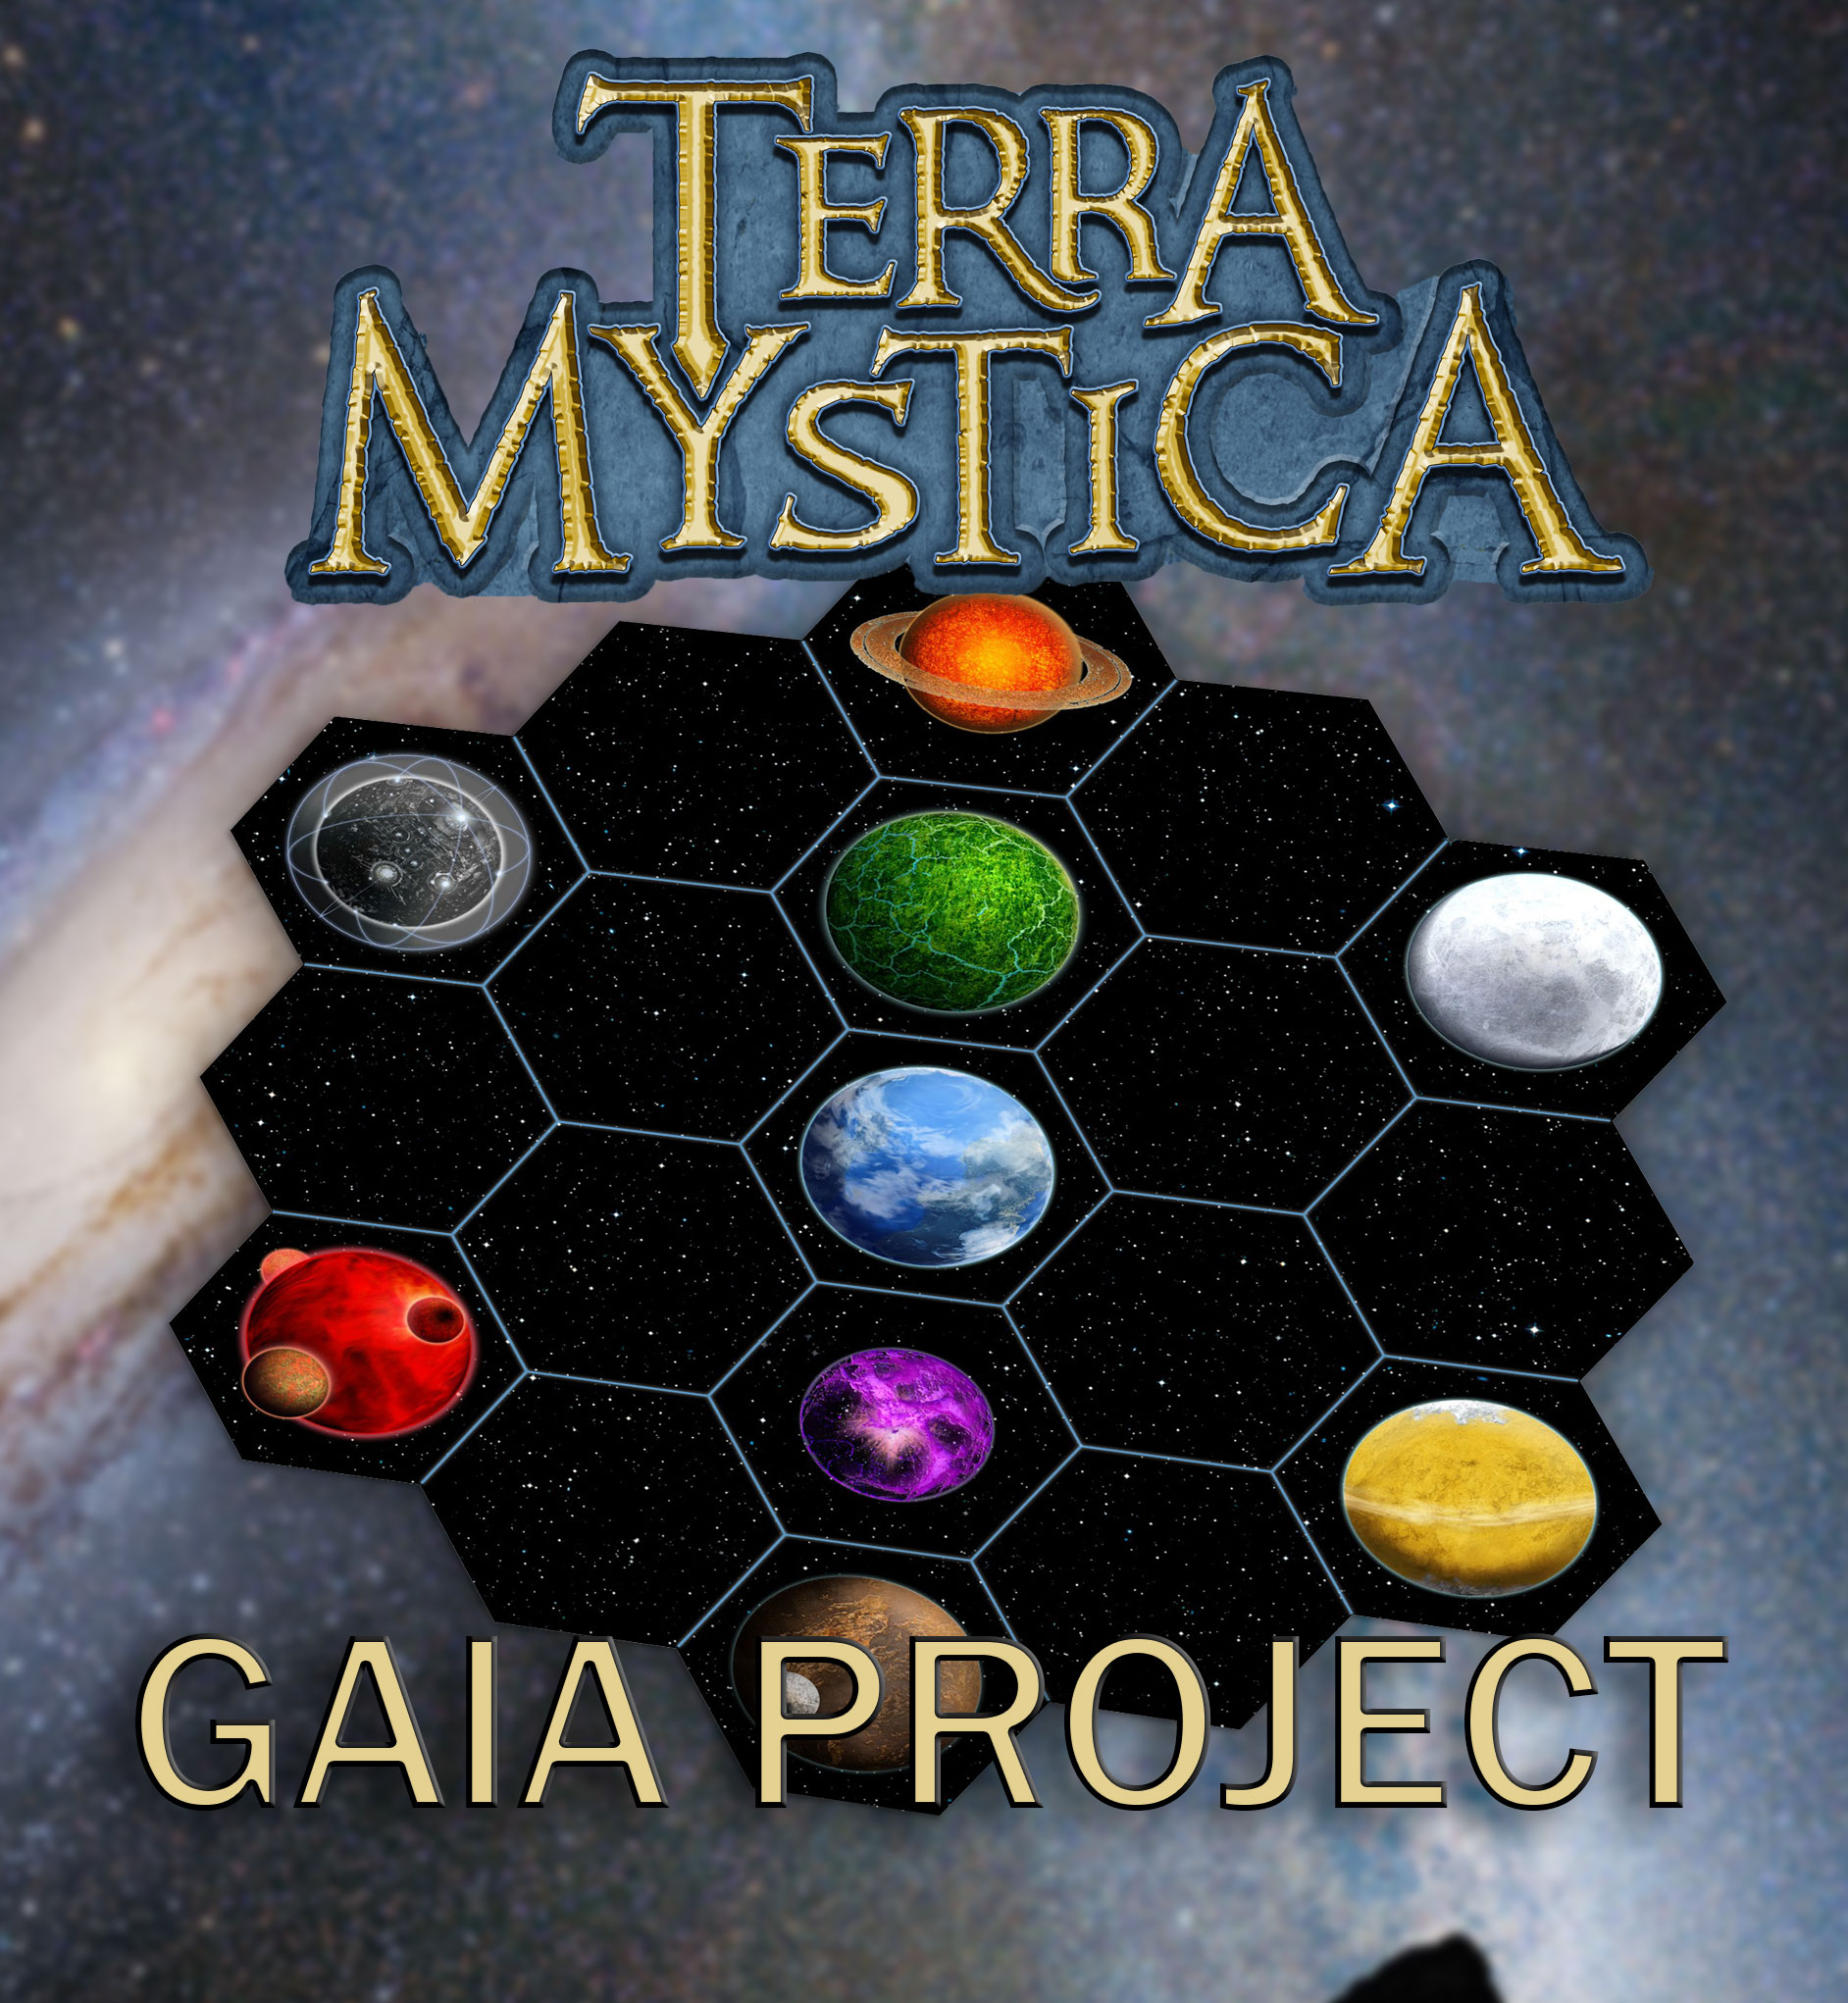 Terra Mystica Gaia Project erscheint 2017